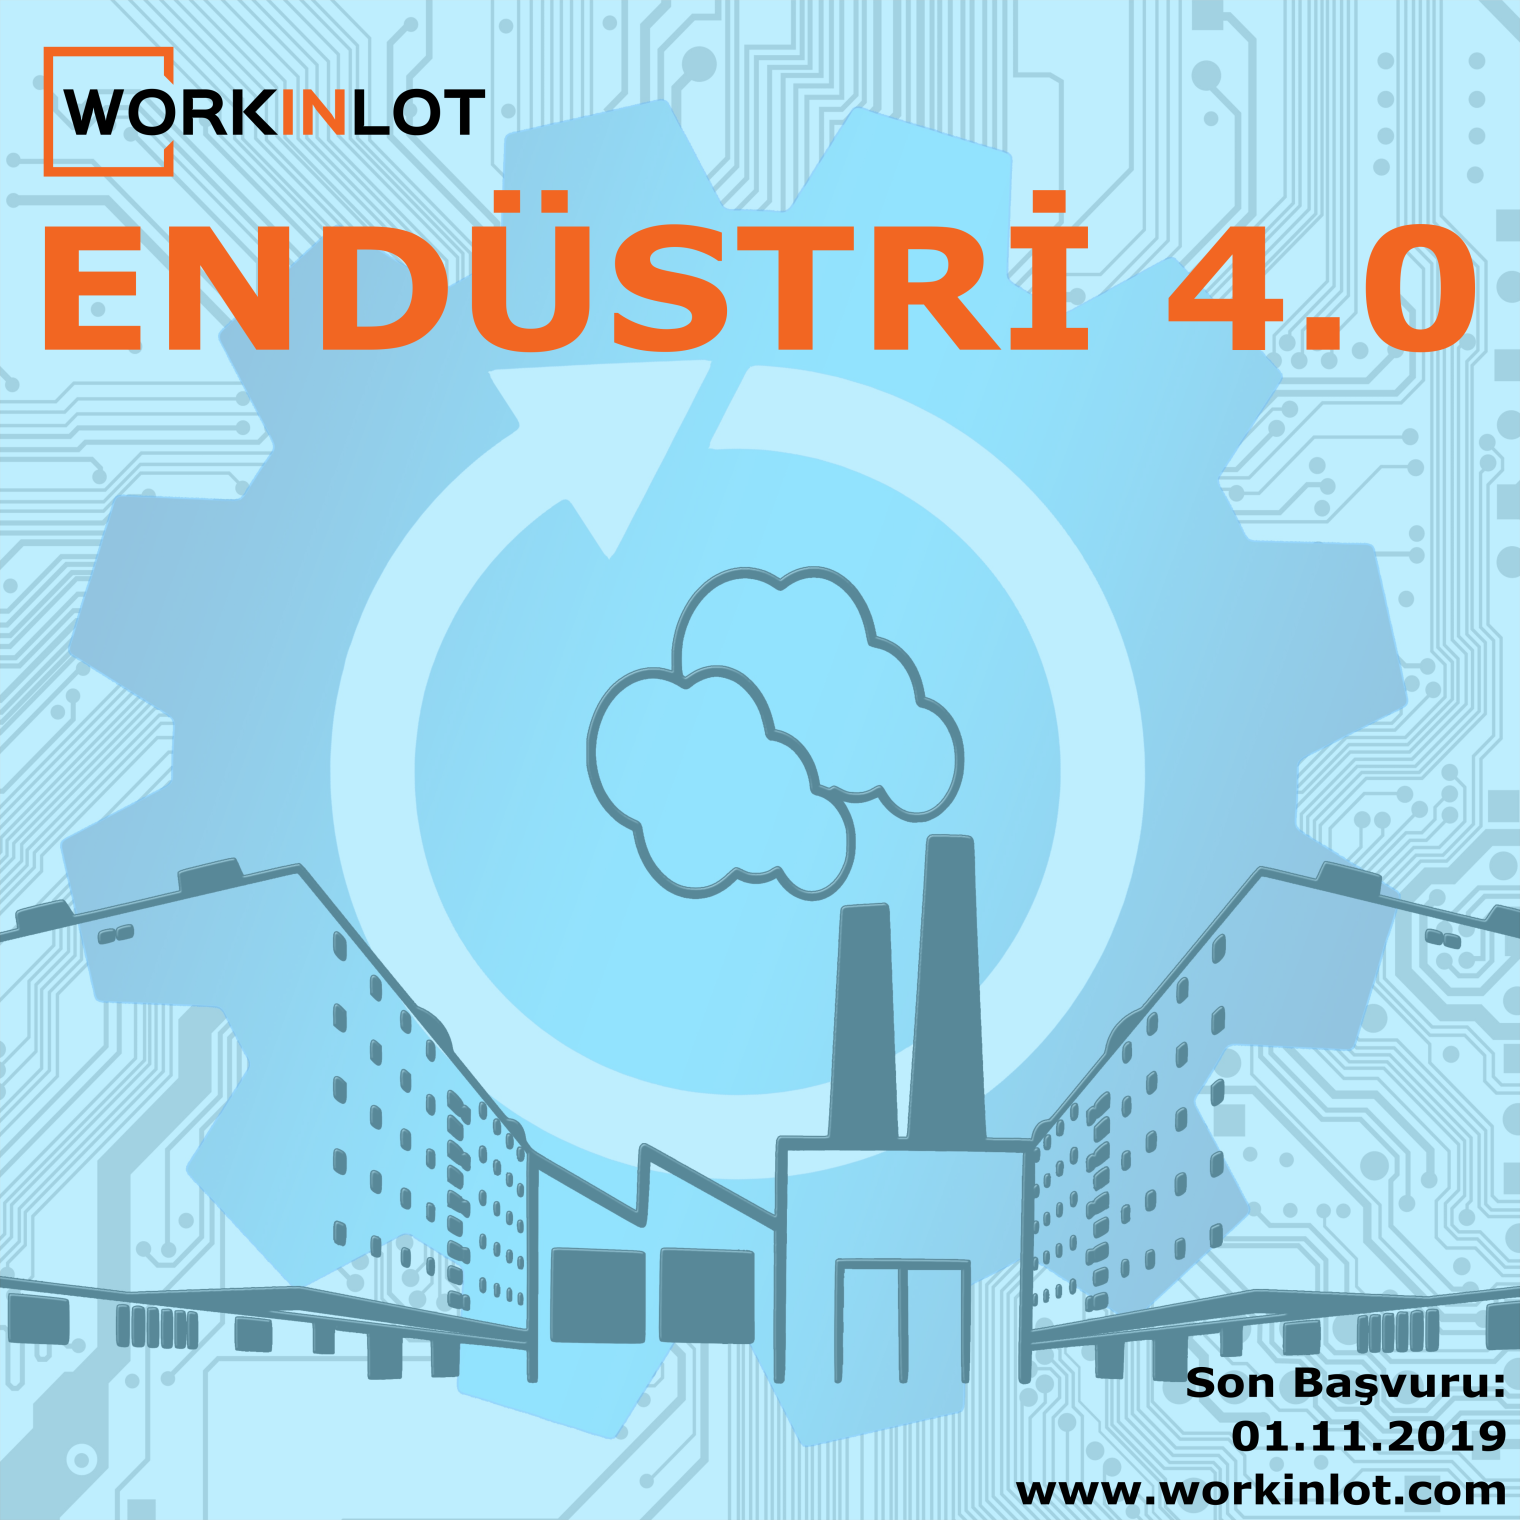 Workinlot Endüstri 4.0 Programı